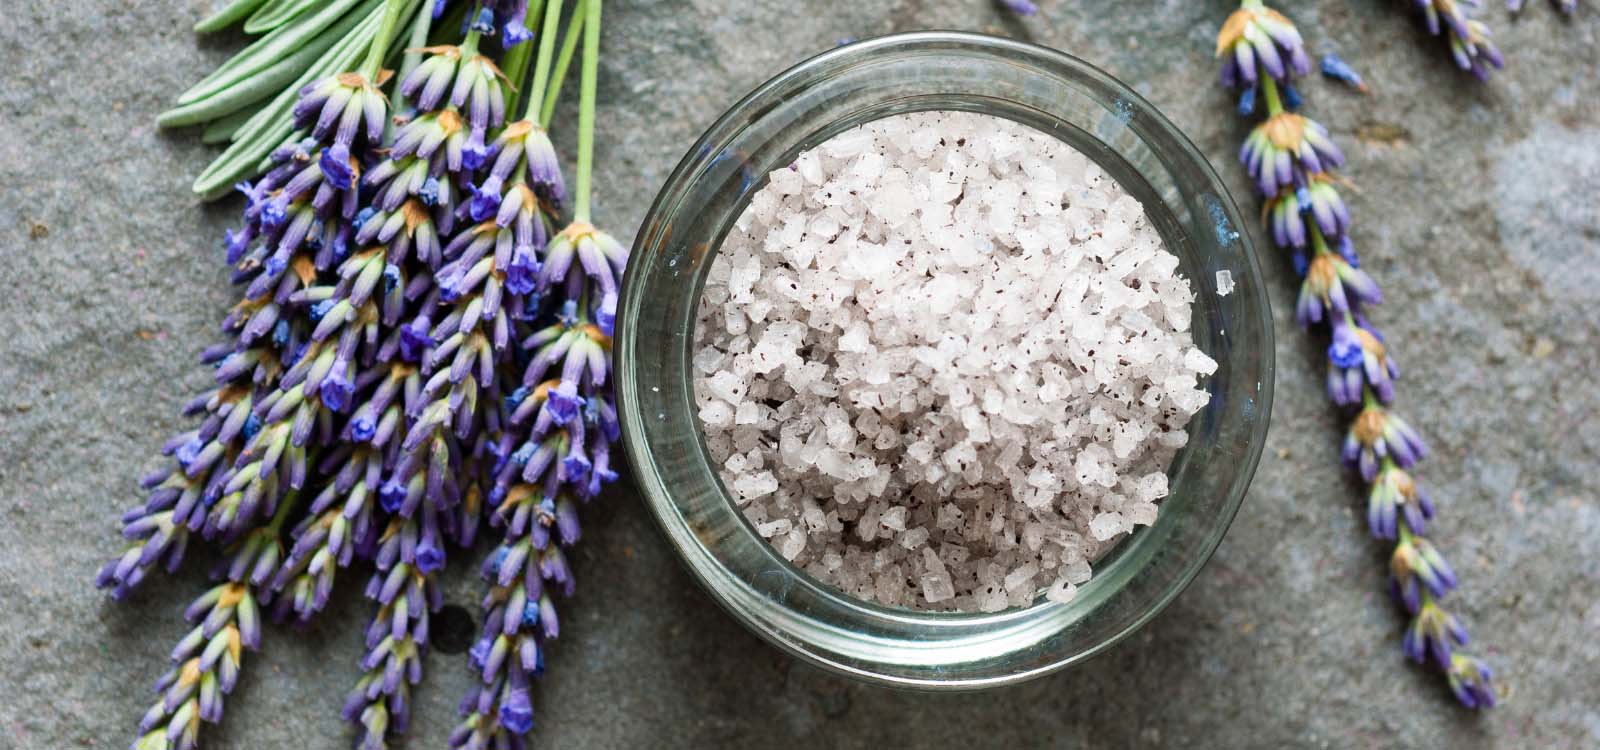 Jar of lavender bath salts.